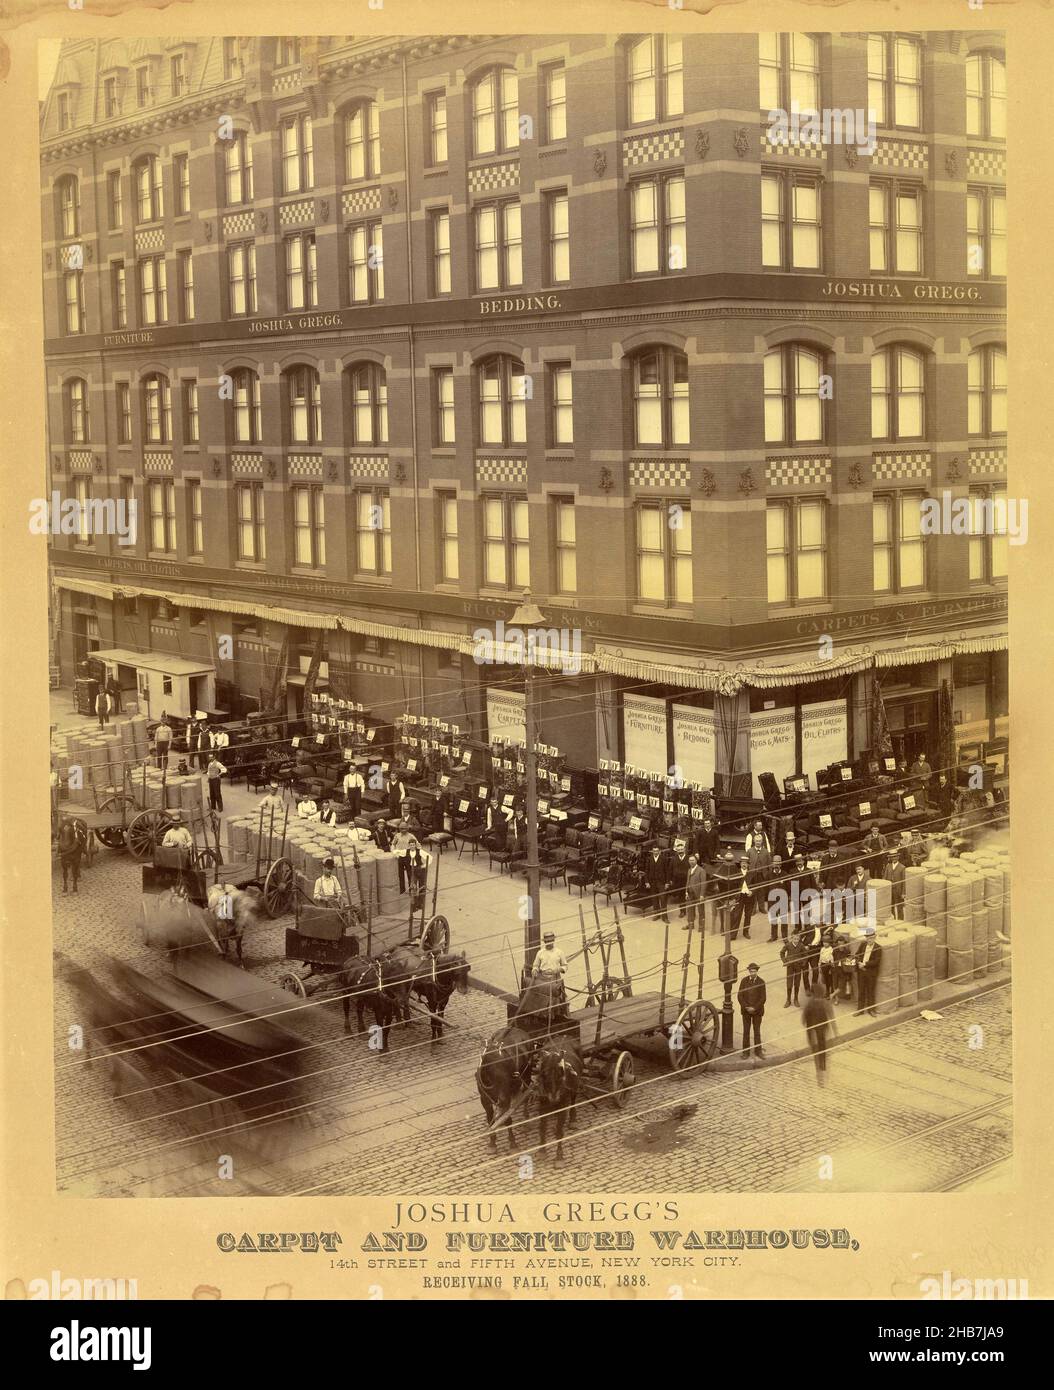 New york city 1888 fotografías e imágenes de alta resolución - Alamy